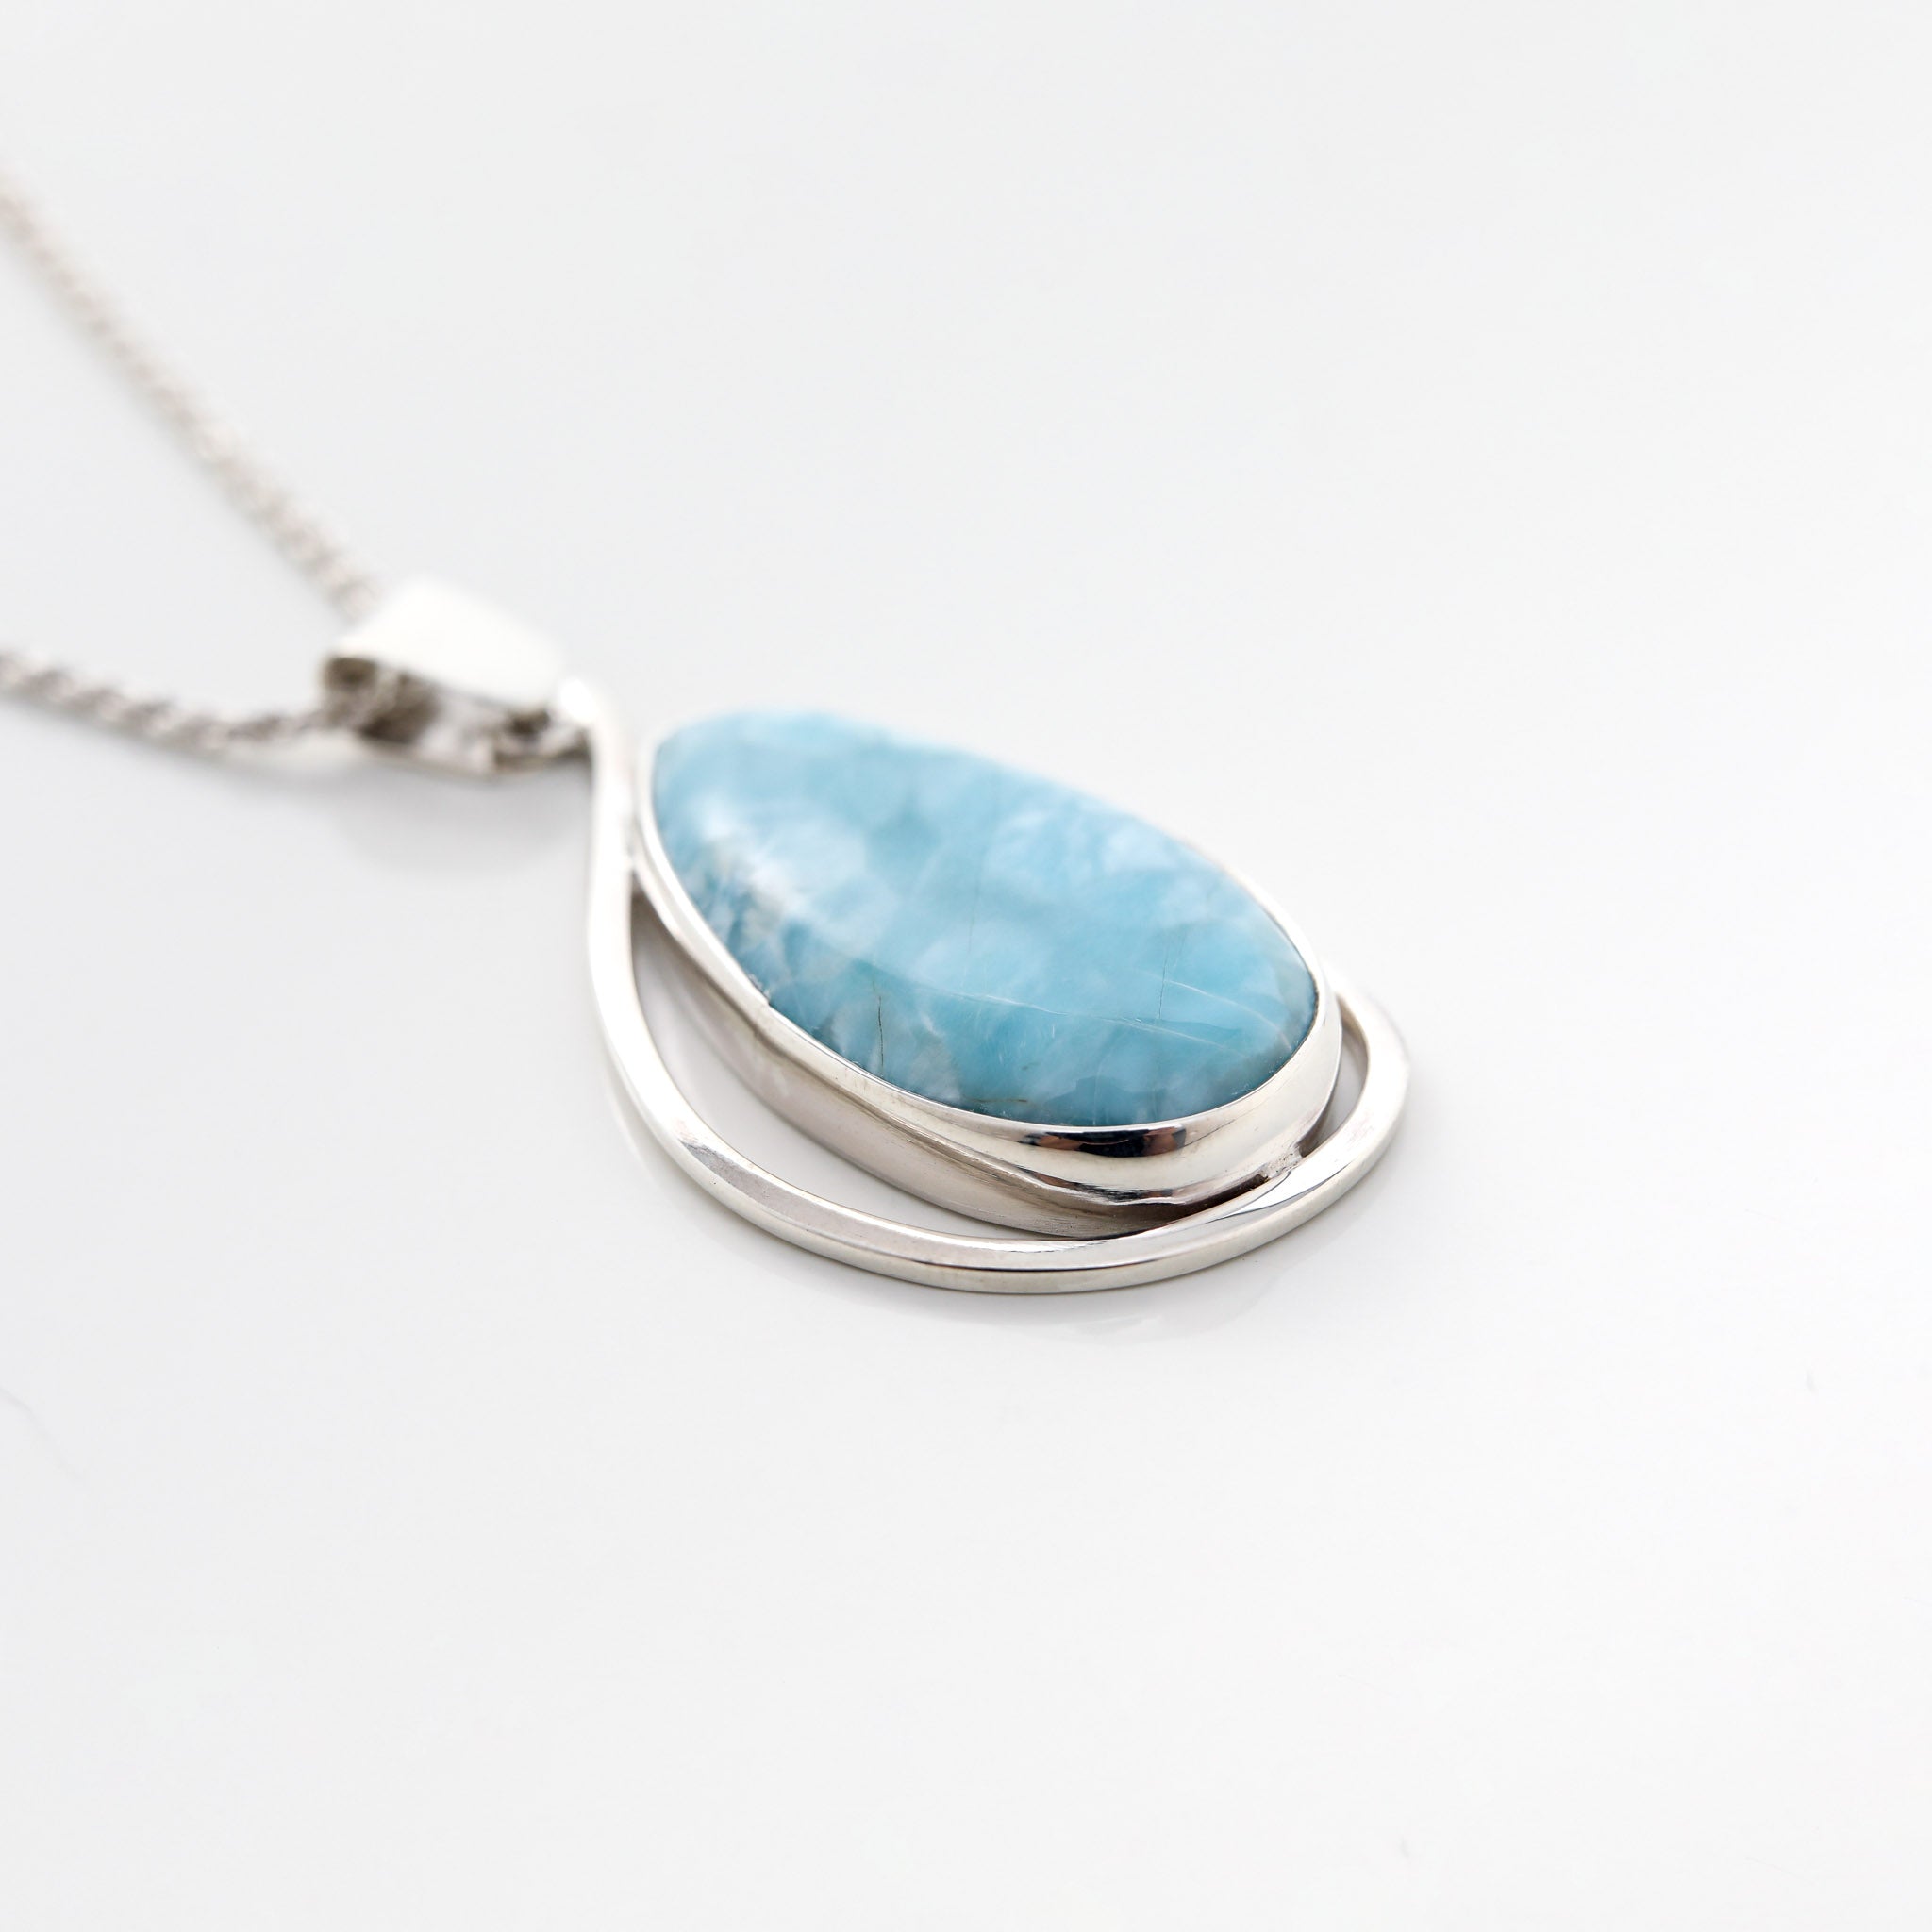 Larimar vibrant blue pendant for women